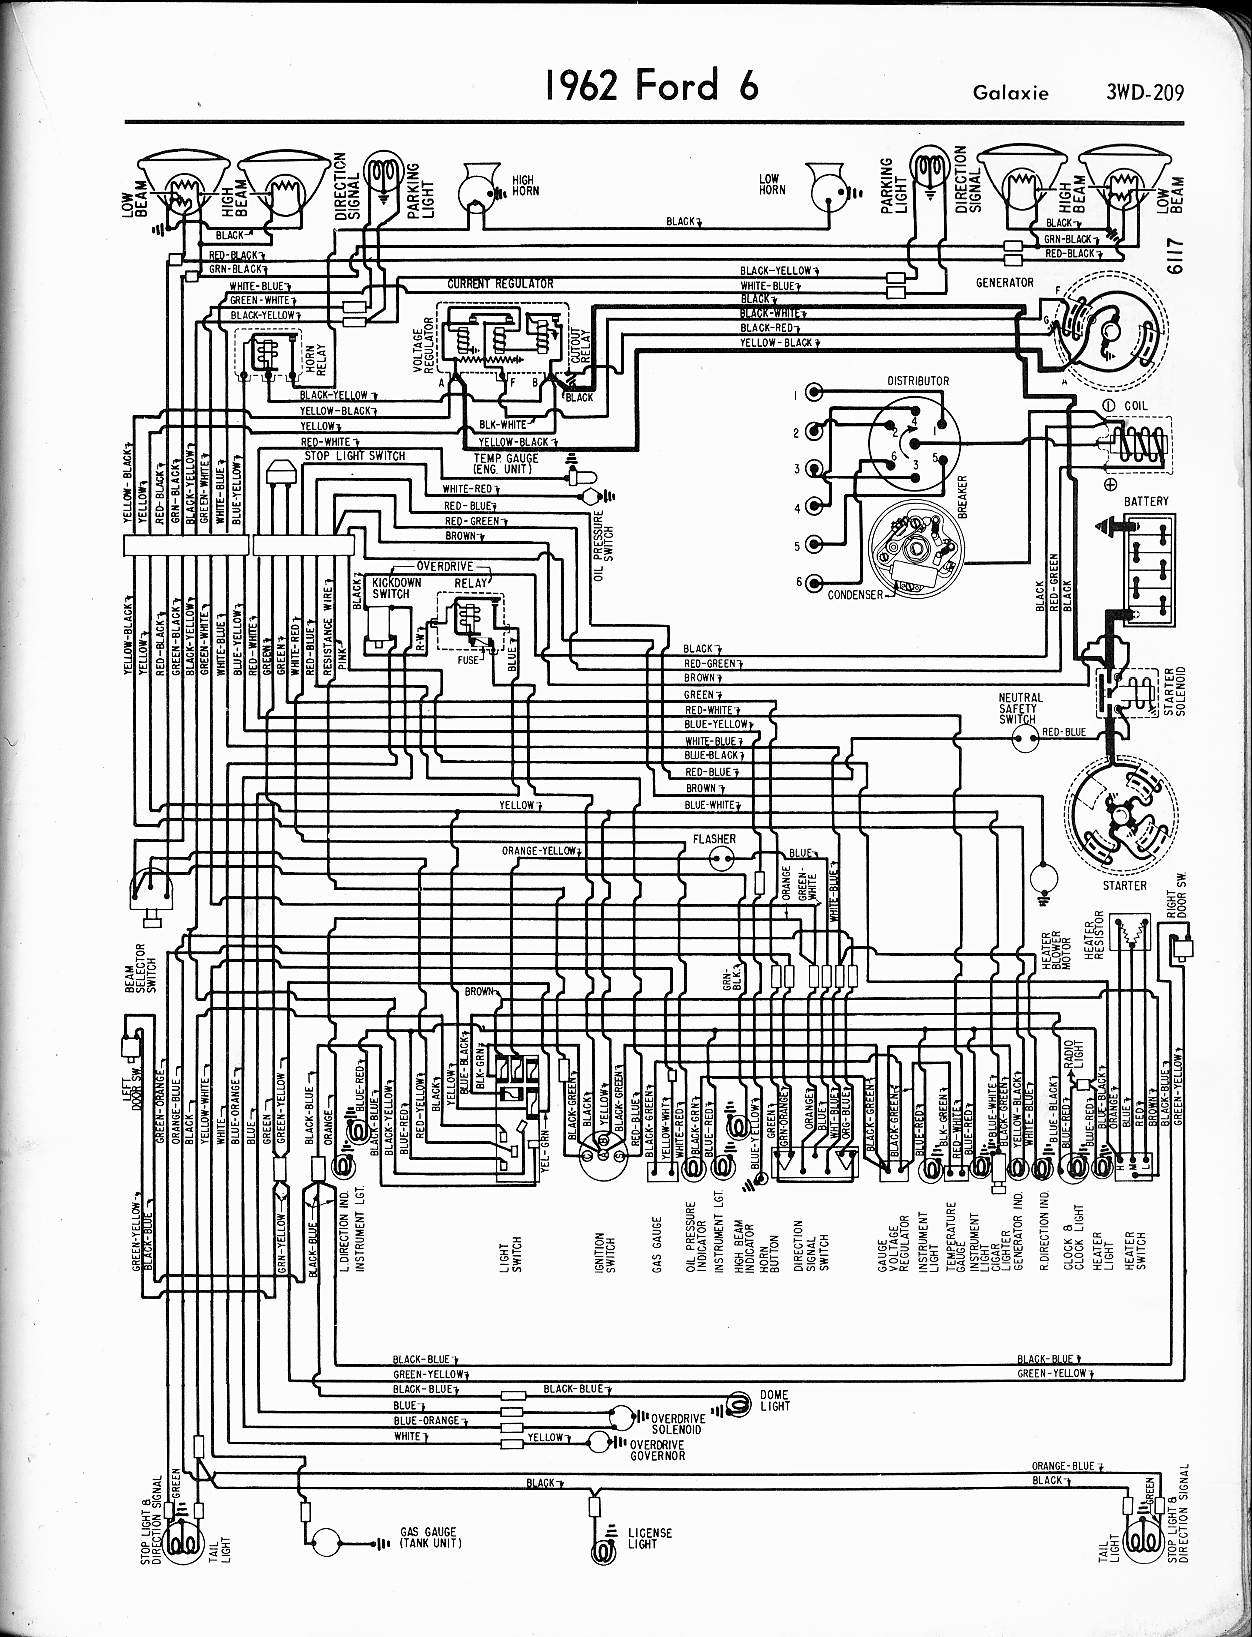 1965 Ford galaxie wiring diagram #3